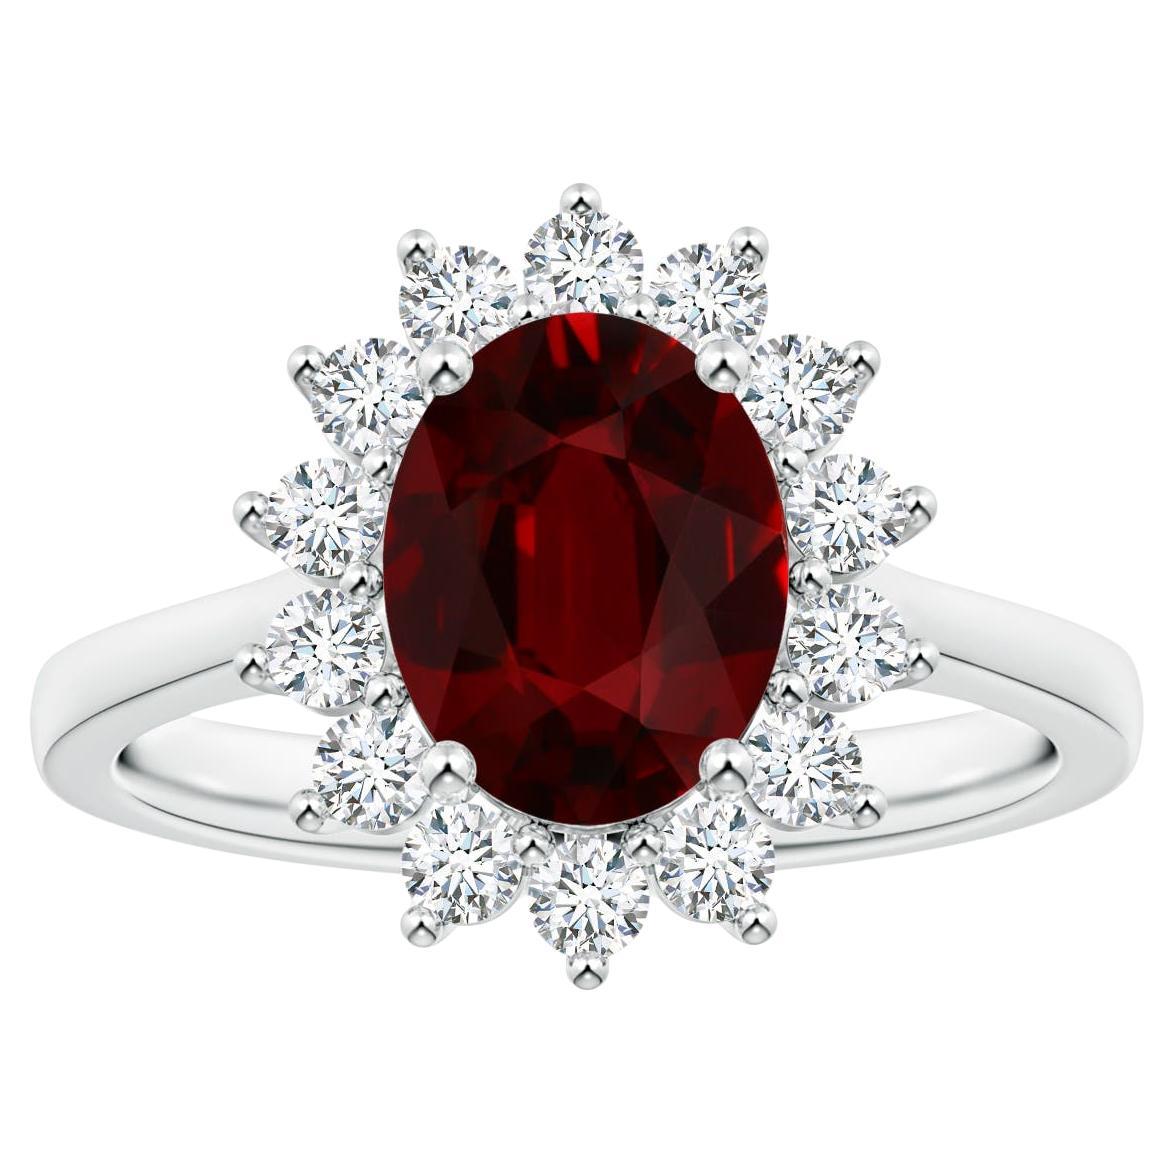 ANGARA Princess Diana Inspired GIA Certified Ruby Halo Ring in Platinum